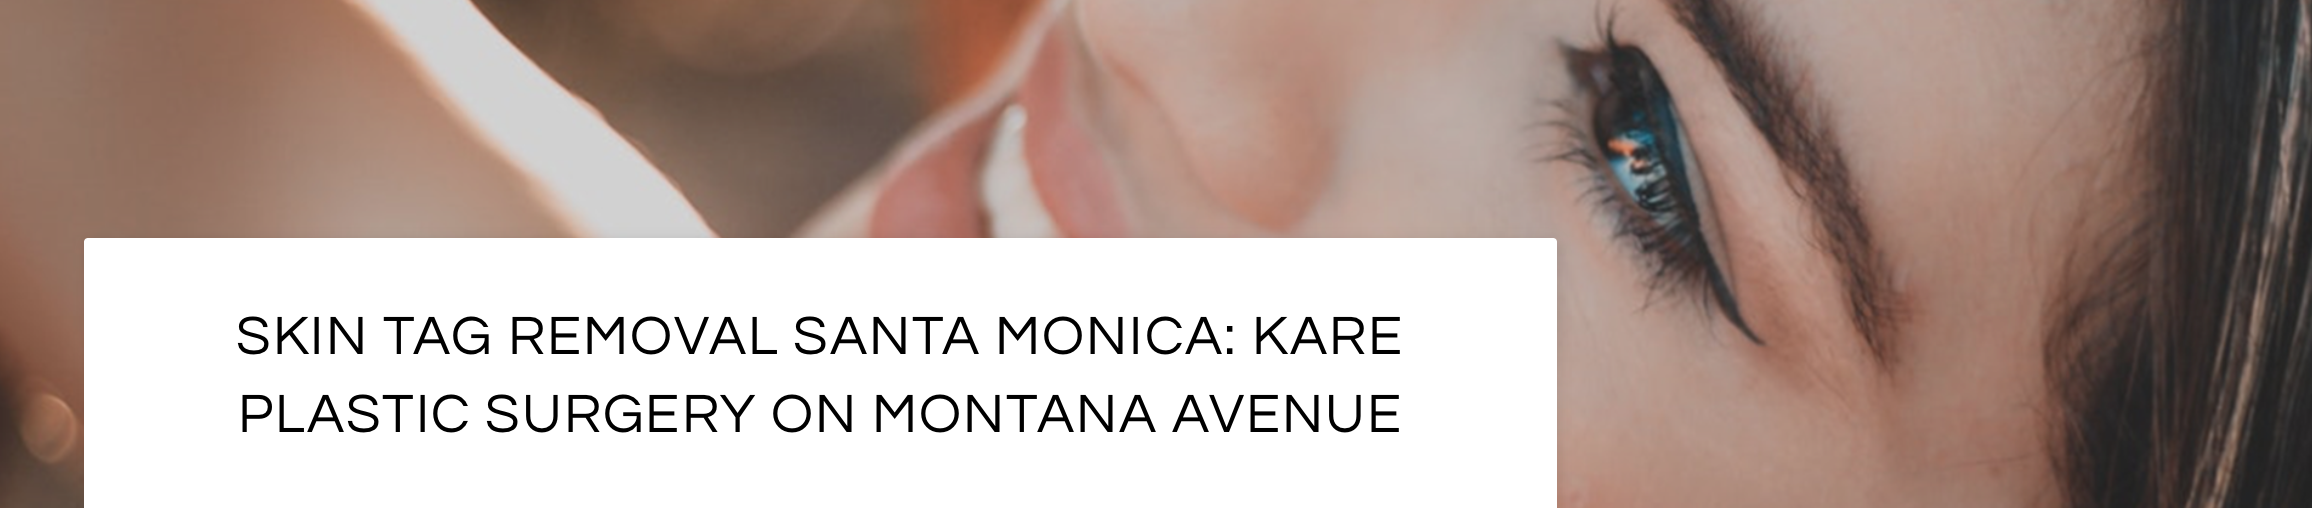 Skin tag removal in Santa Monica at Kare Plastic Surgery